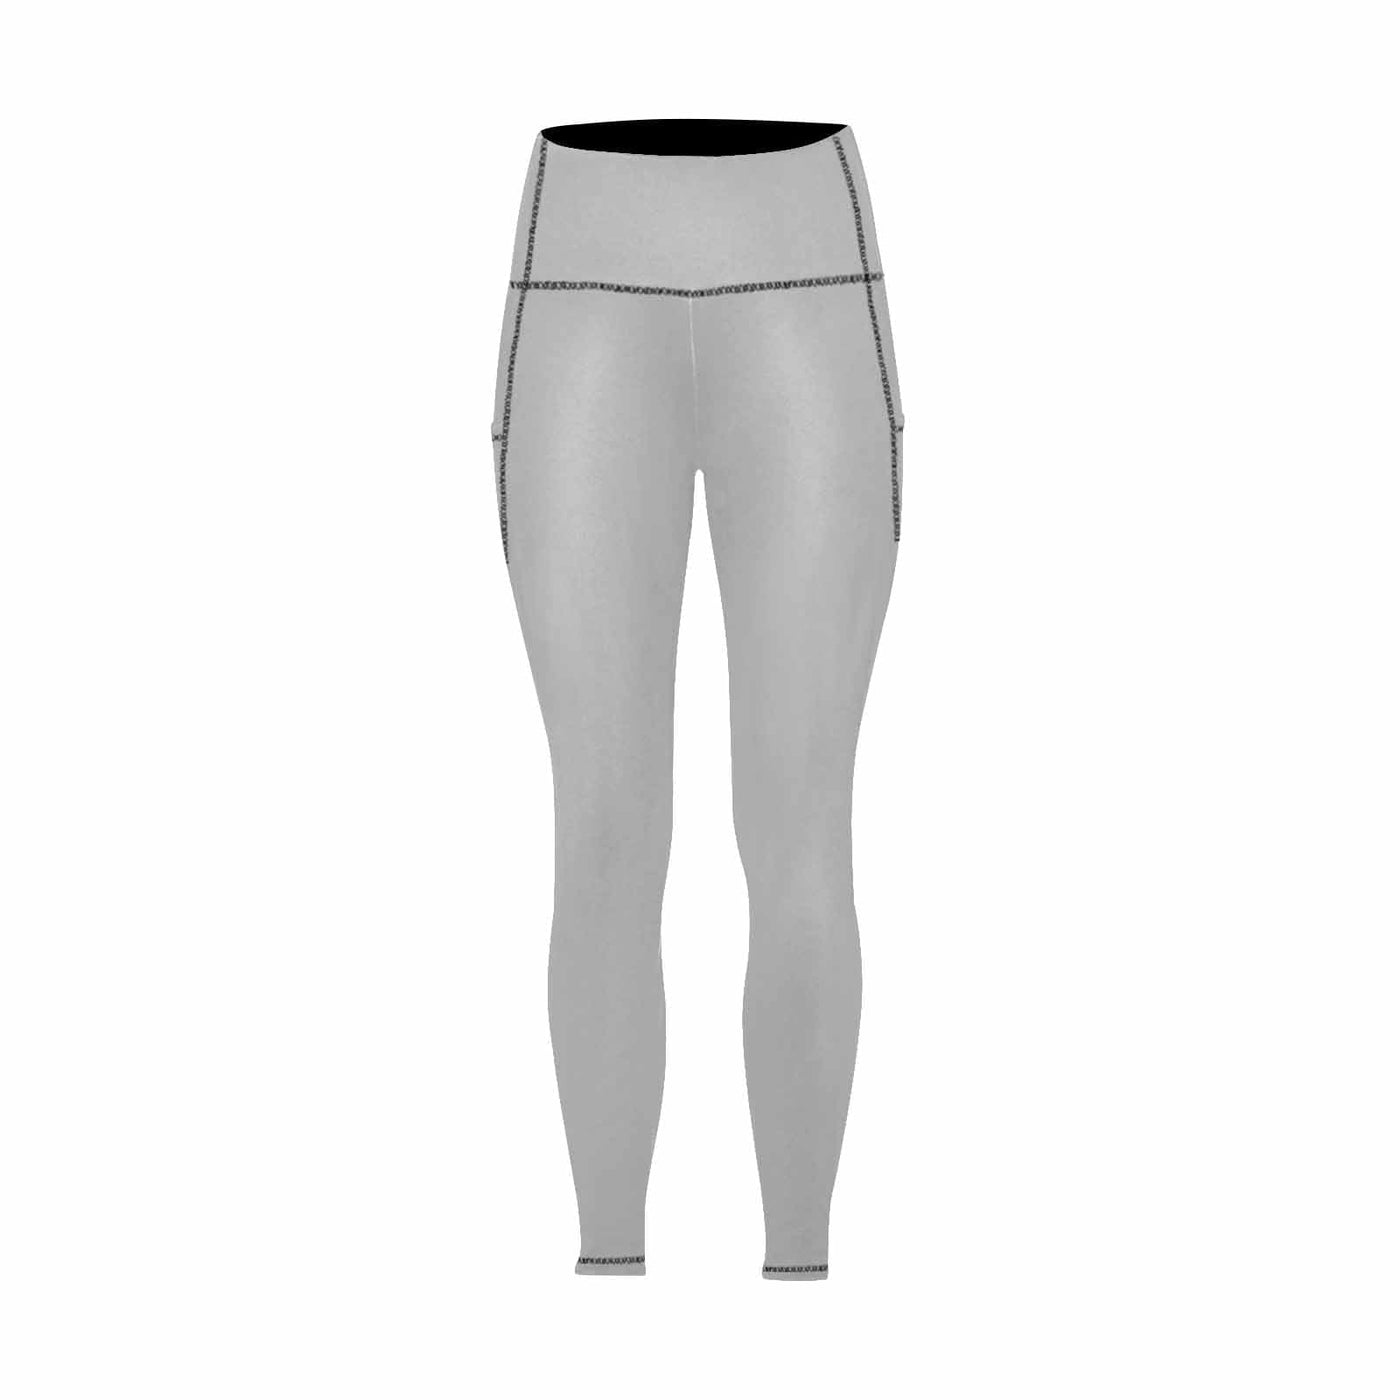 Womens High Waist Fitness Leggings With Pockets / Yoga Pants Light Grey